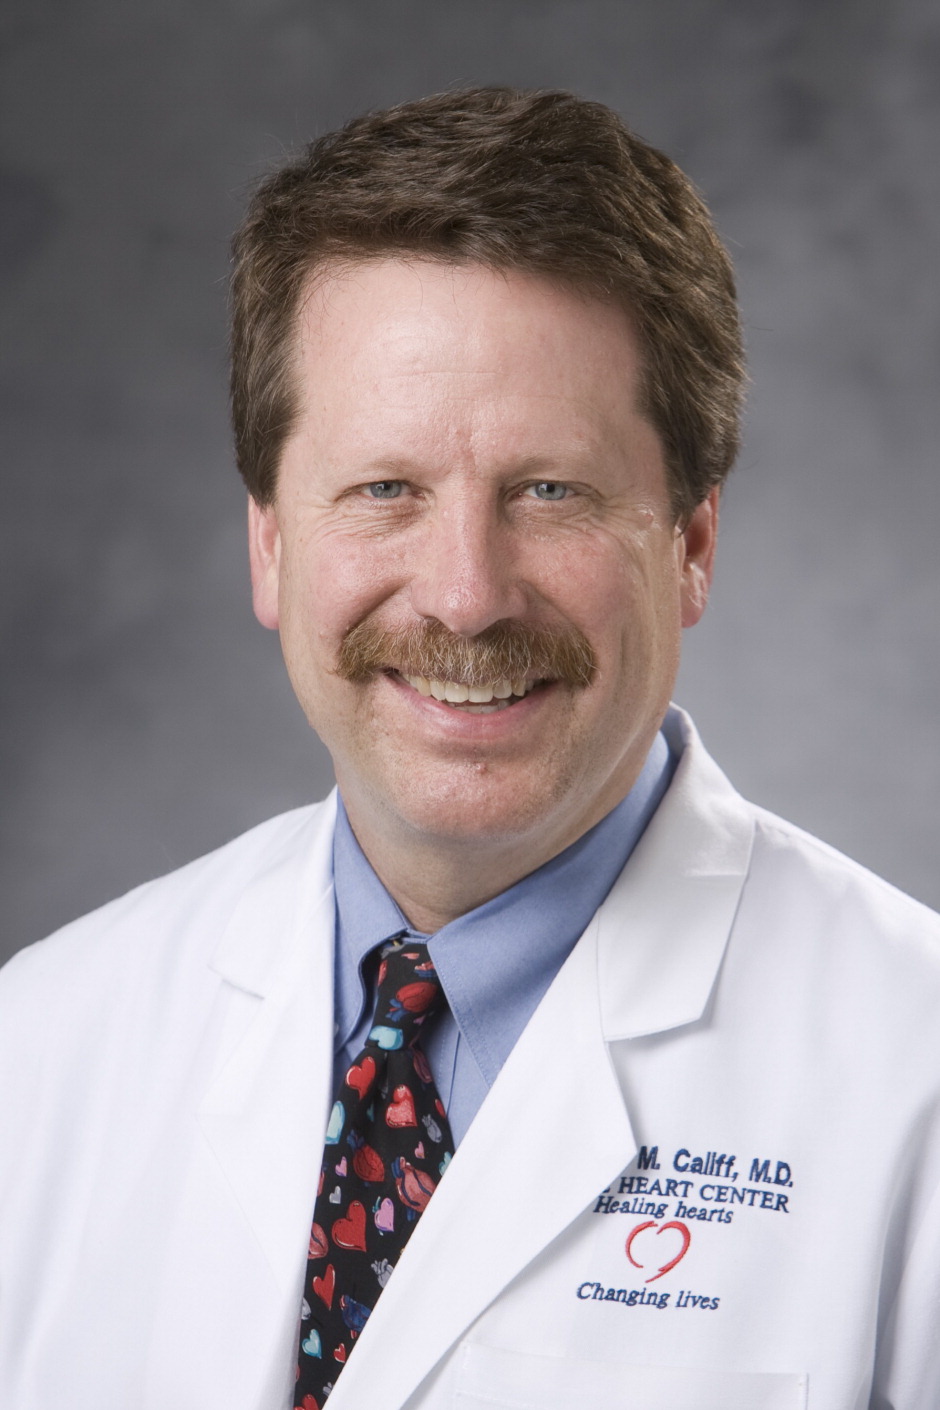 Robert M. Califf, MD, FAHA